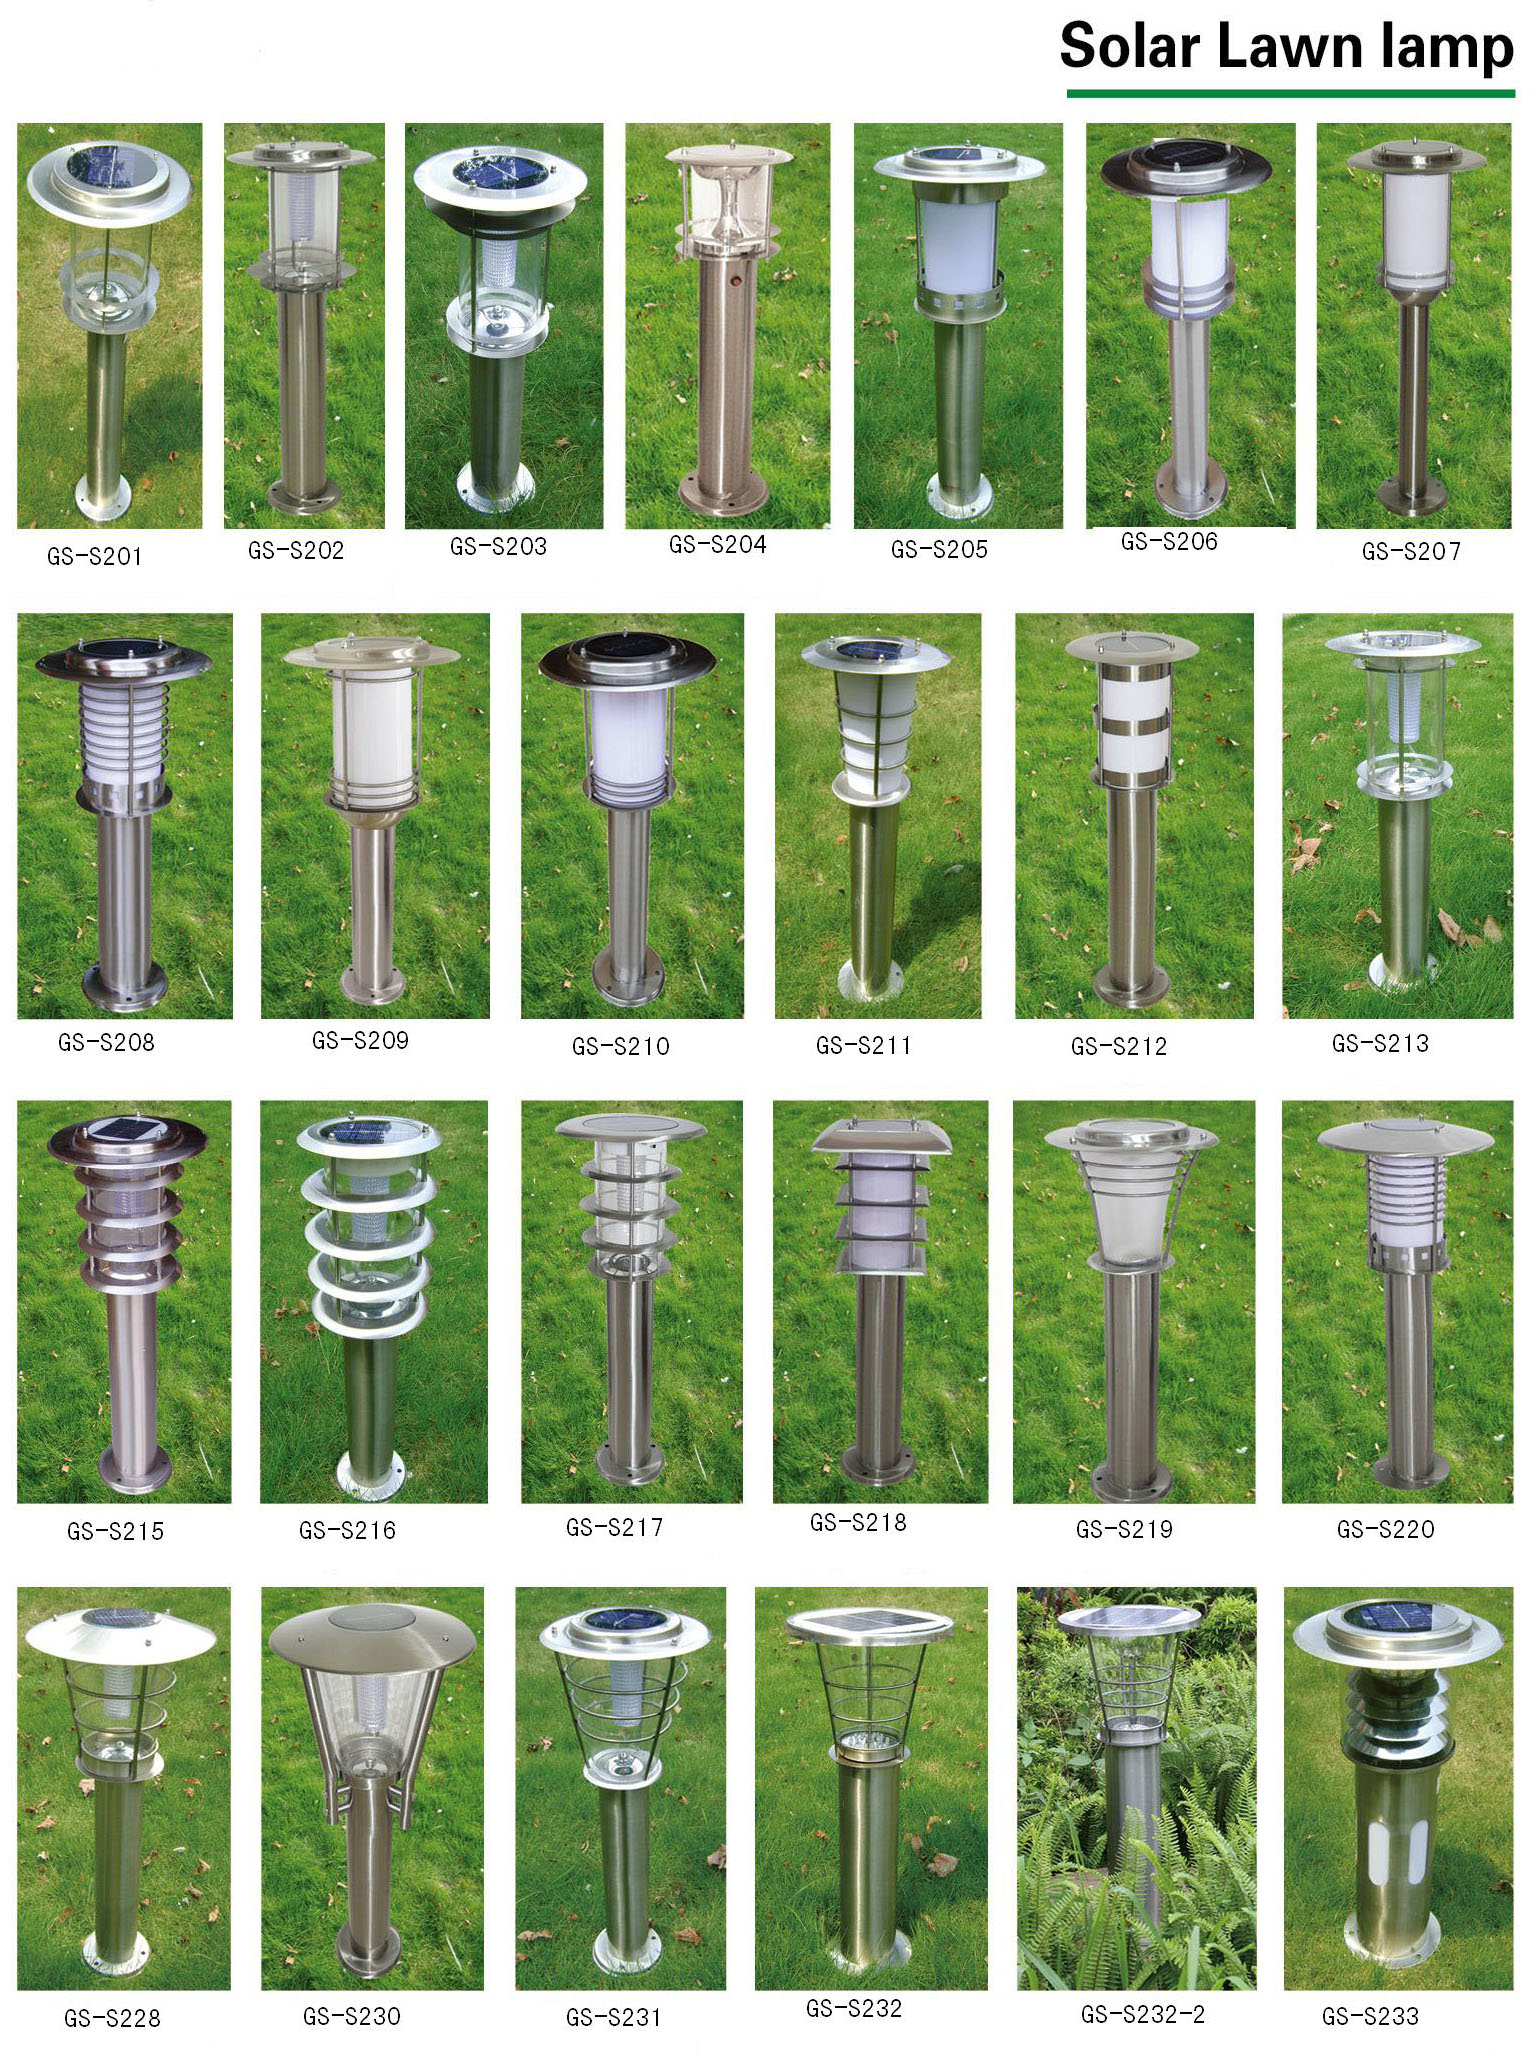 outdoor Landscape light solar Led lawn lamp/light in  yard,parth,garden,street,statium 